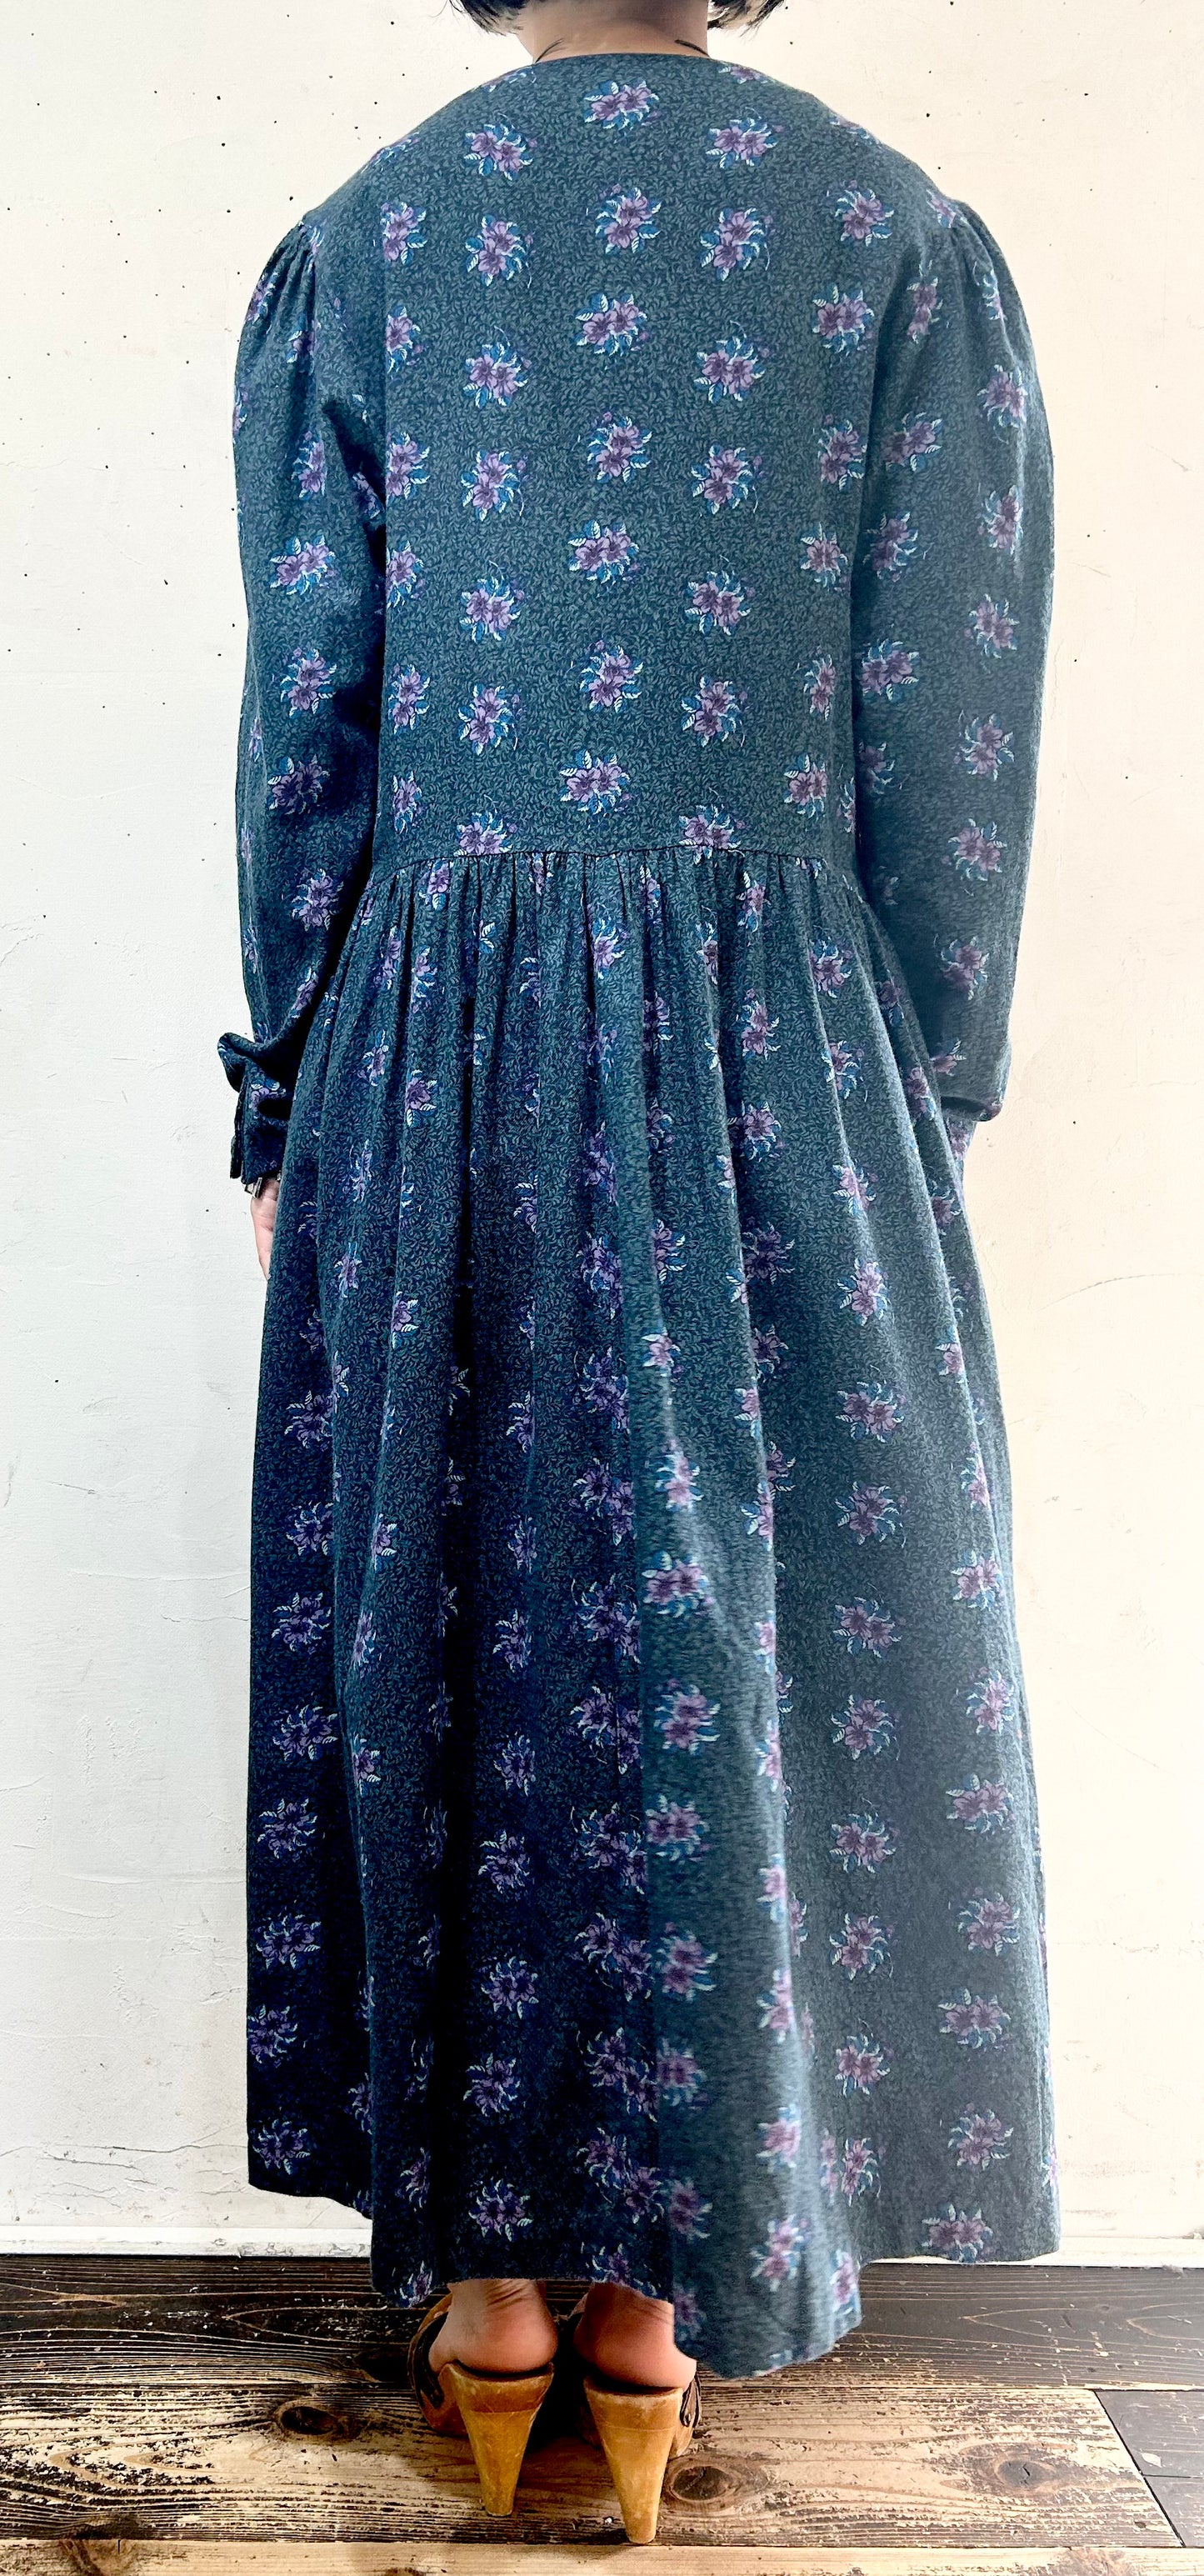 Vintage Flower Dress 〜Laura Ashley〜 [H24877]